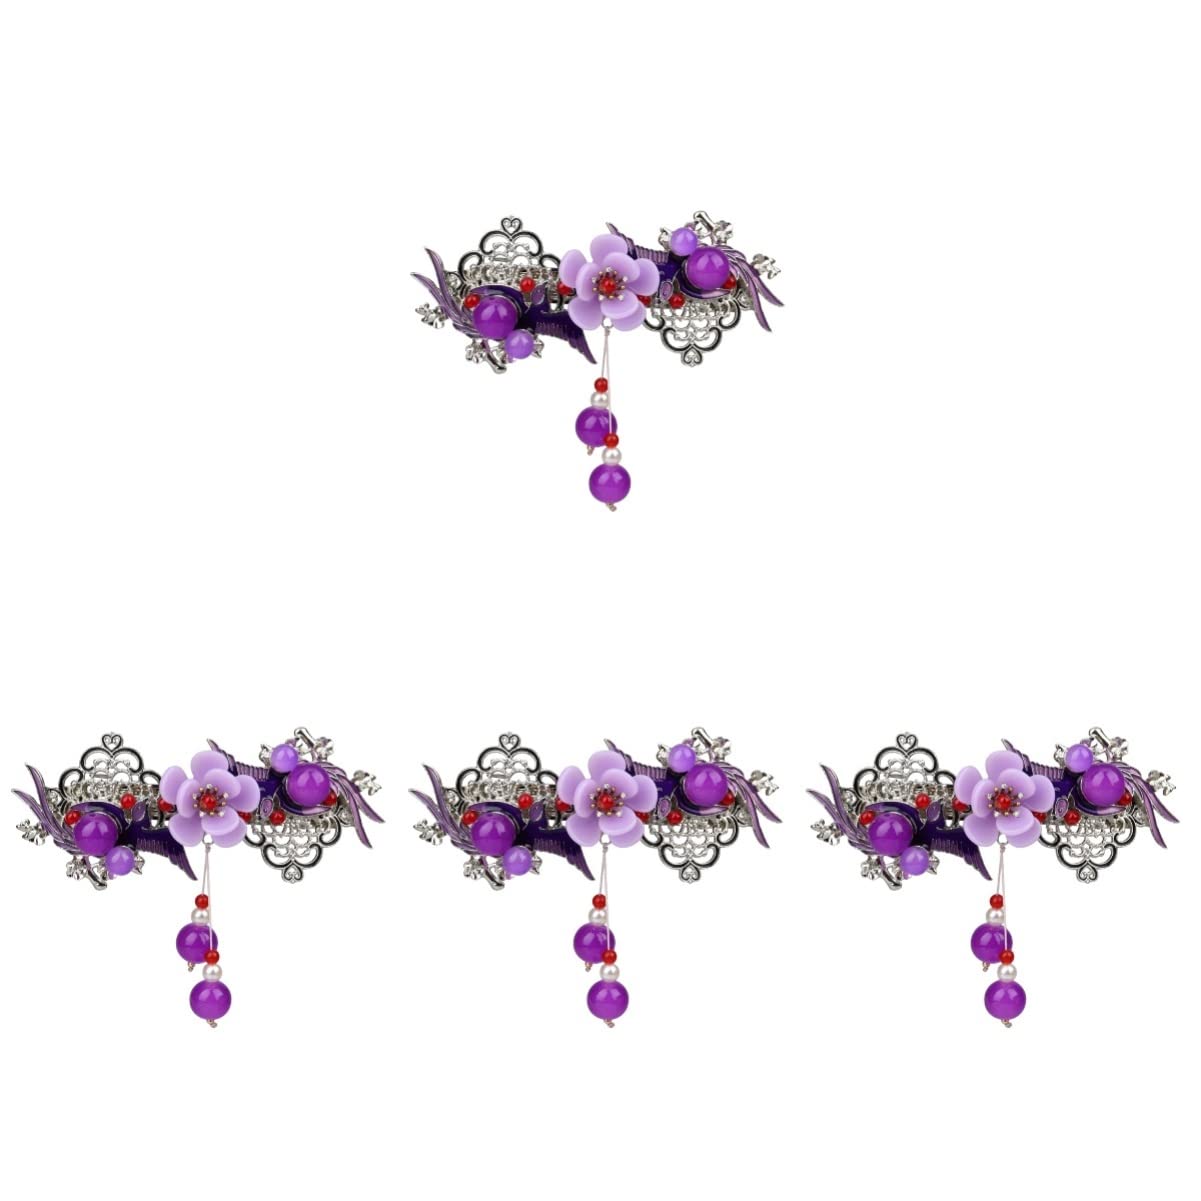 SHUBIAO 6 Stück Vintage Dekorative Blume Blume Haarspangen for Frauen Dekorative Haarspangen Haarschmuck for Frauen Haarspange Quaste Haarspangen (Color : Purple, Size : 8.6X3.8X2.5CMx7pcs)